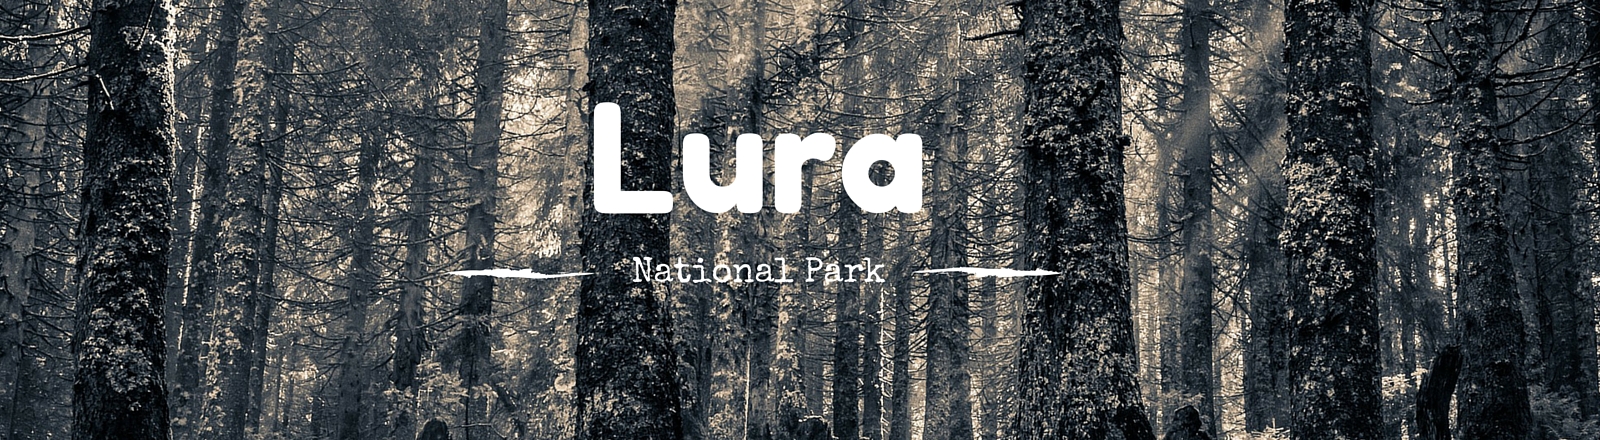 Lura National Park, National Parks Guy